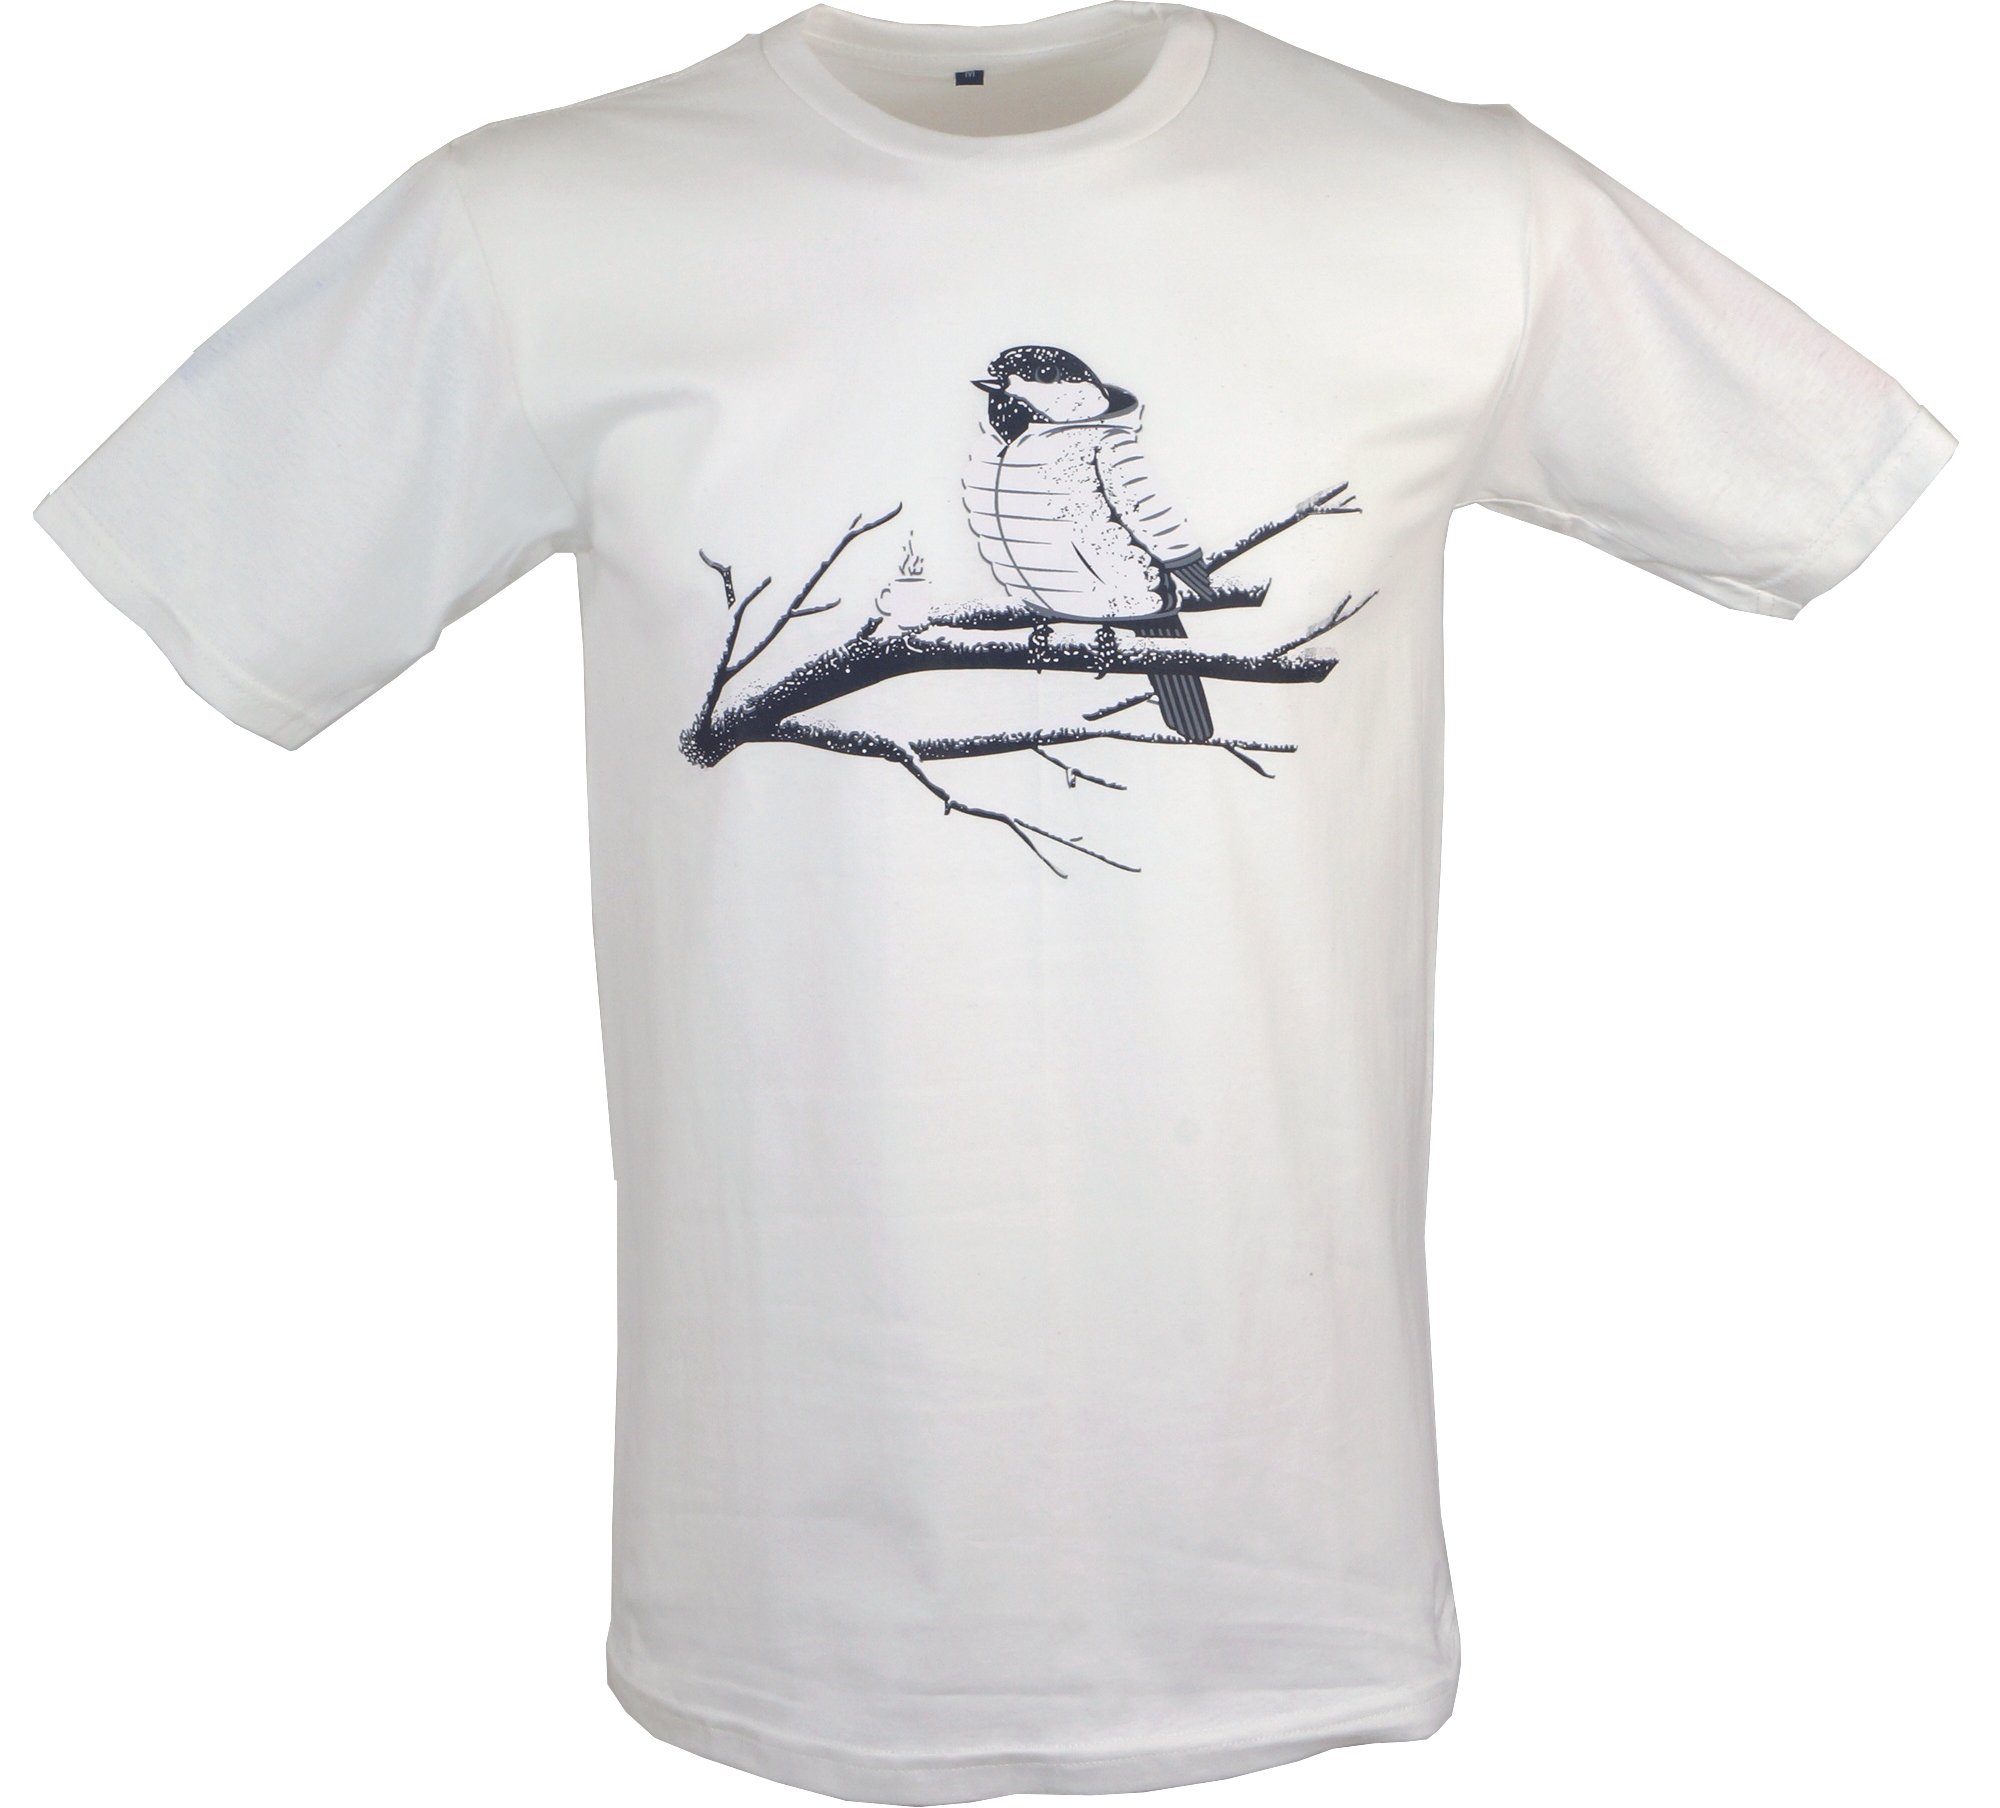 Guru-Shop T-Shirt Fun Retro Art T-Shirt - Flugpause /weiß alternative Bekleidung